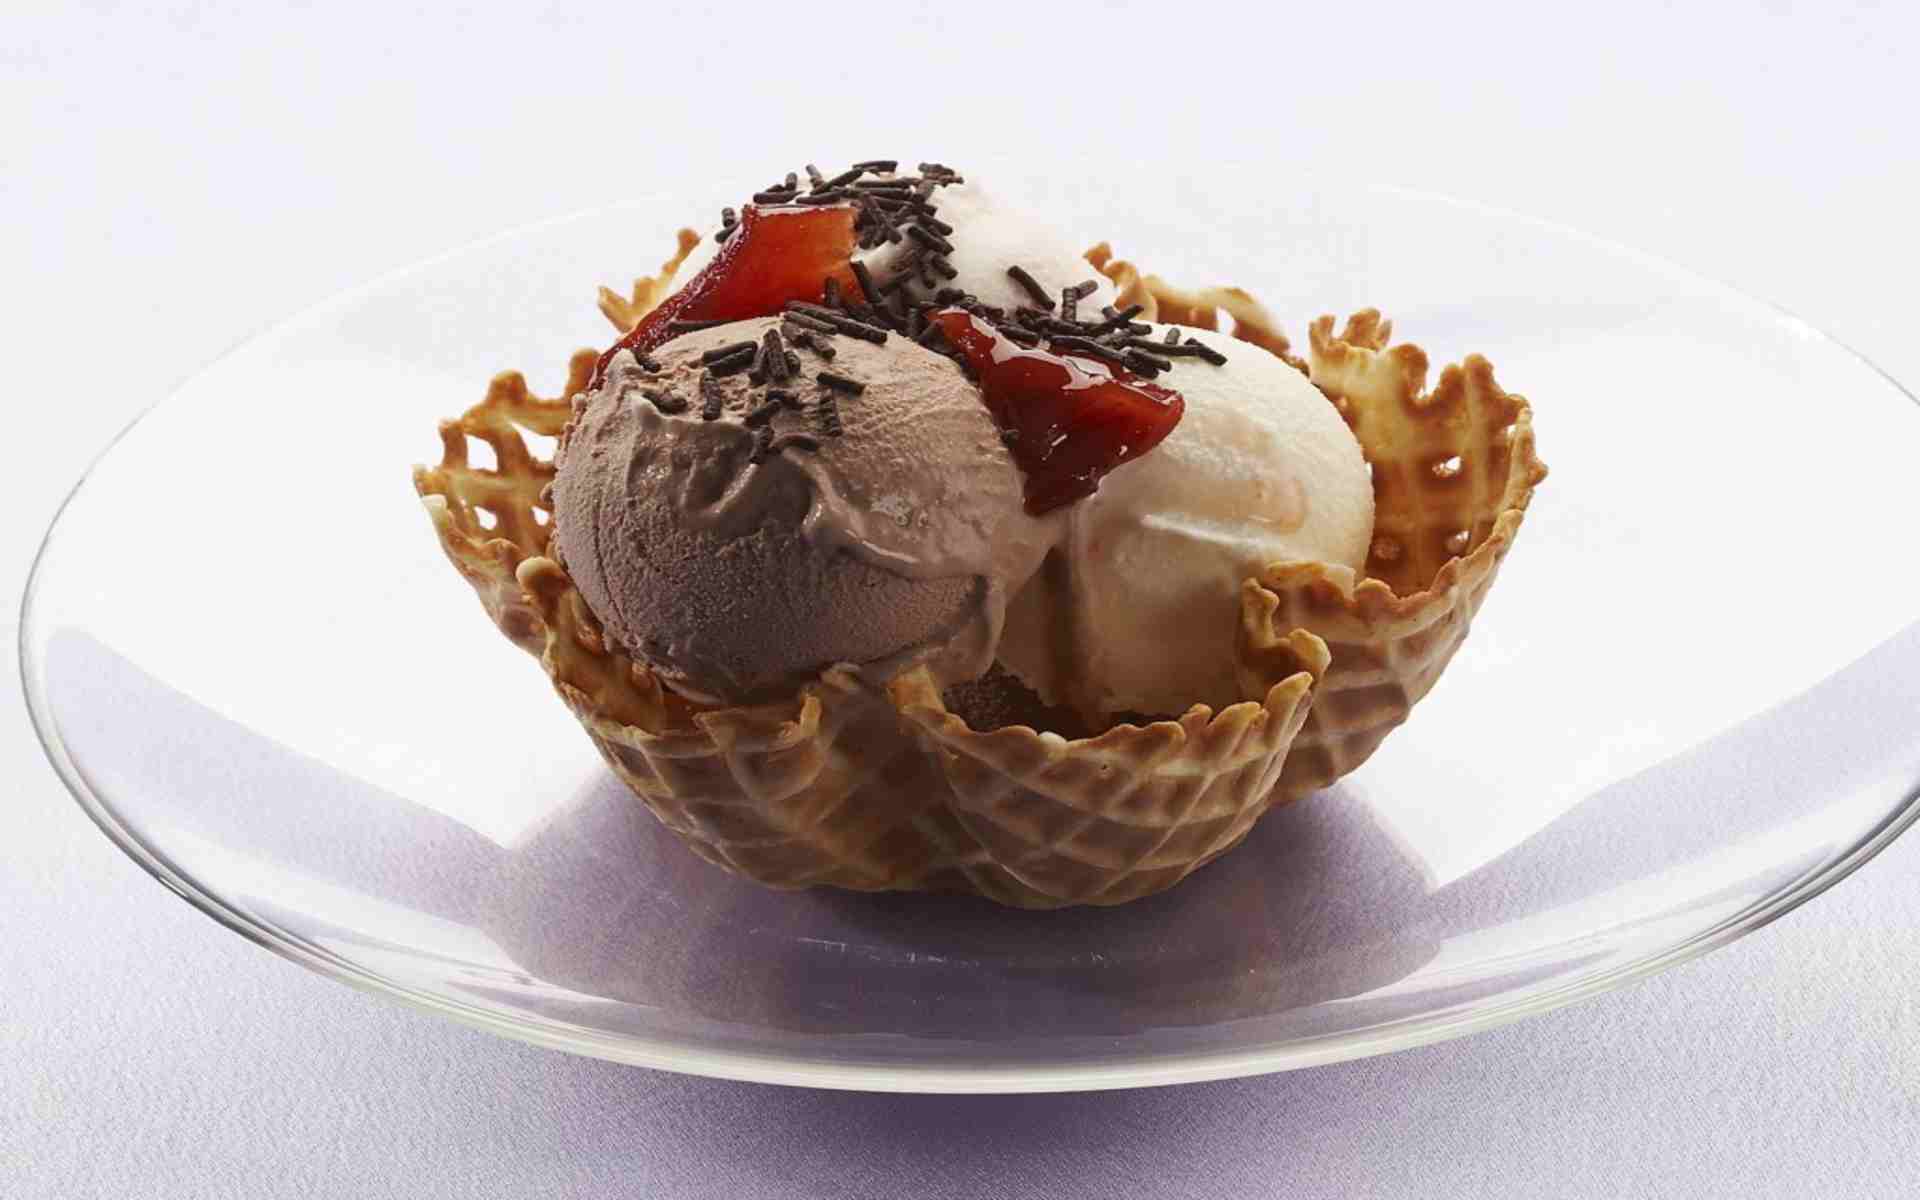 DOWNLOAD: food dessert ice cream balloons chocolates basket jam free picture 2560 x 1600